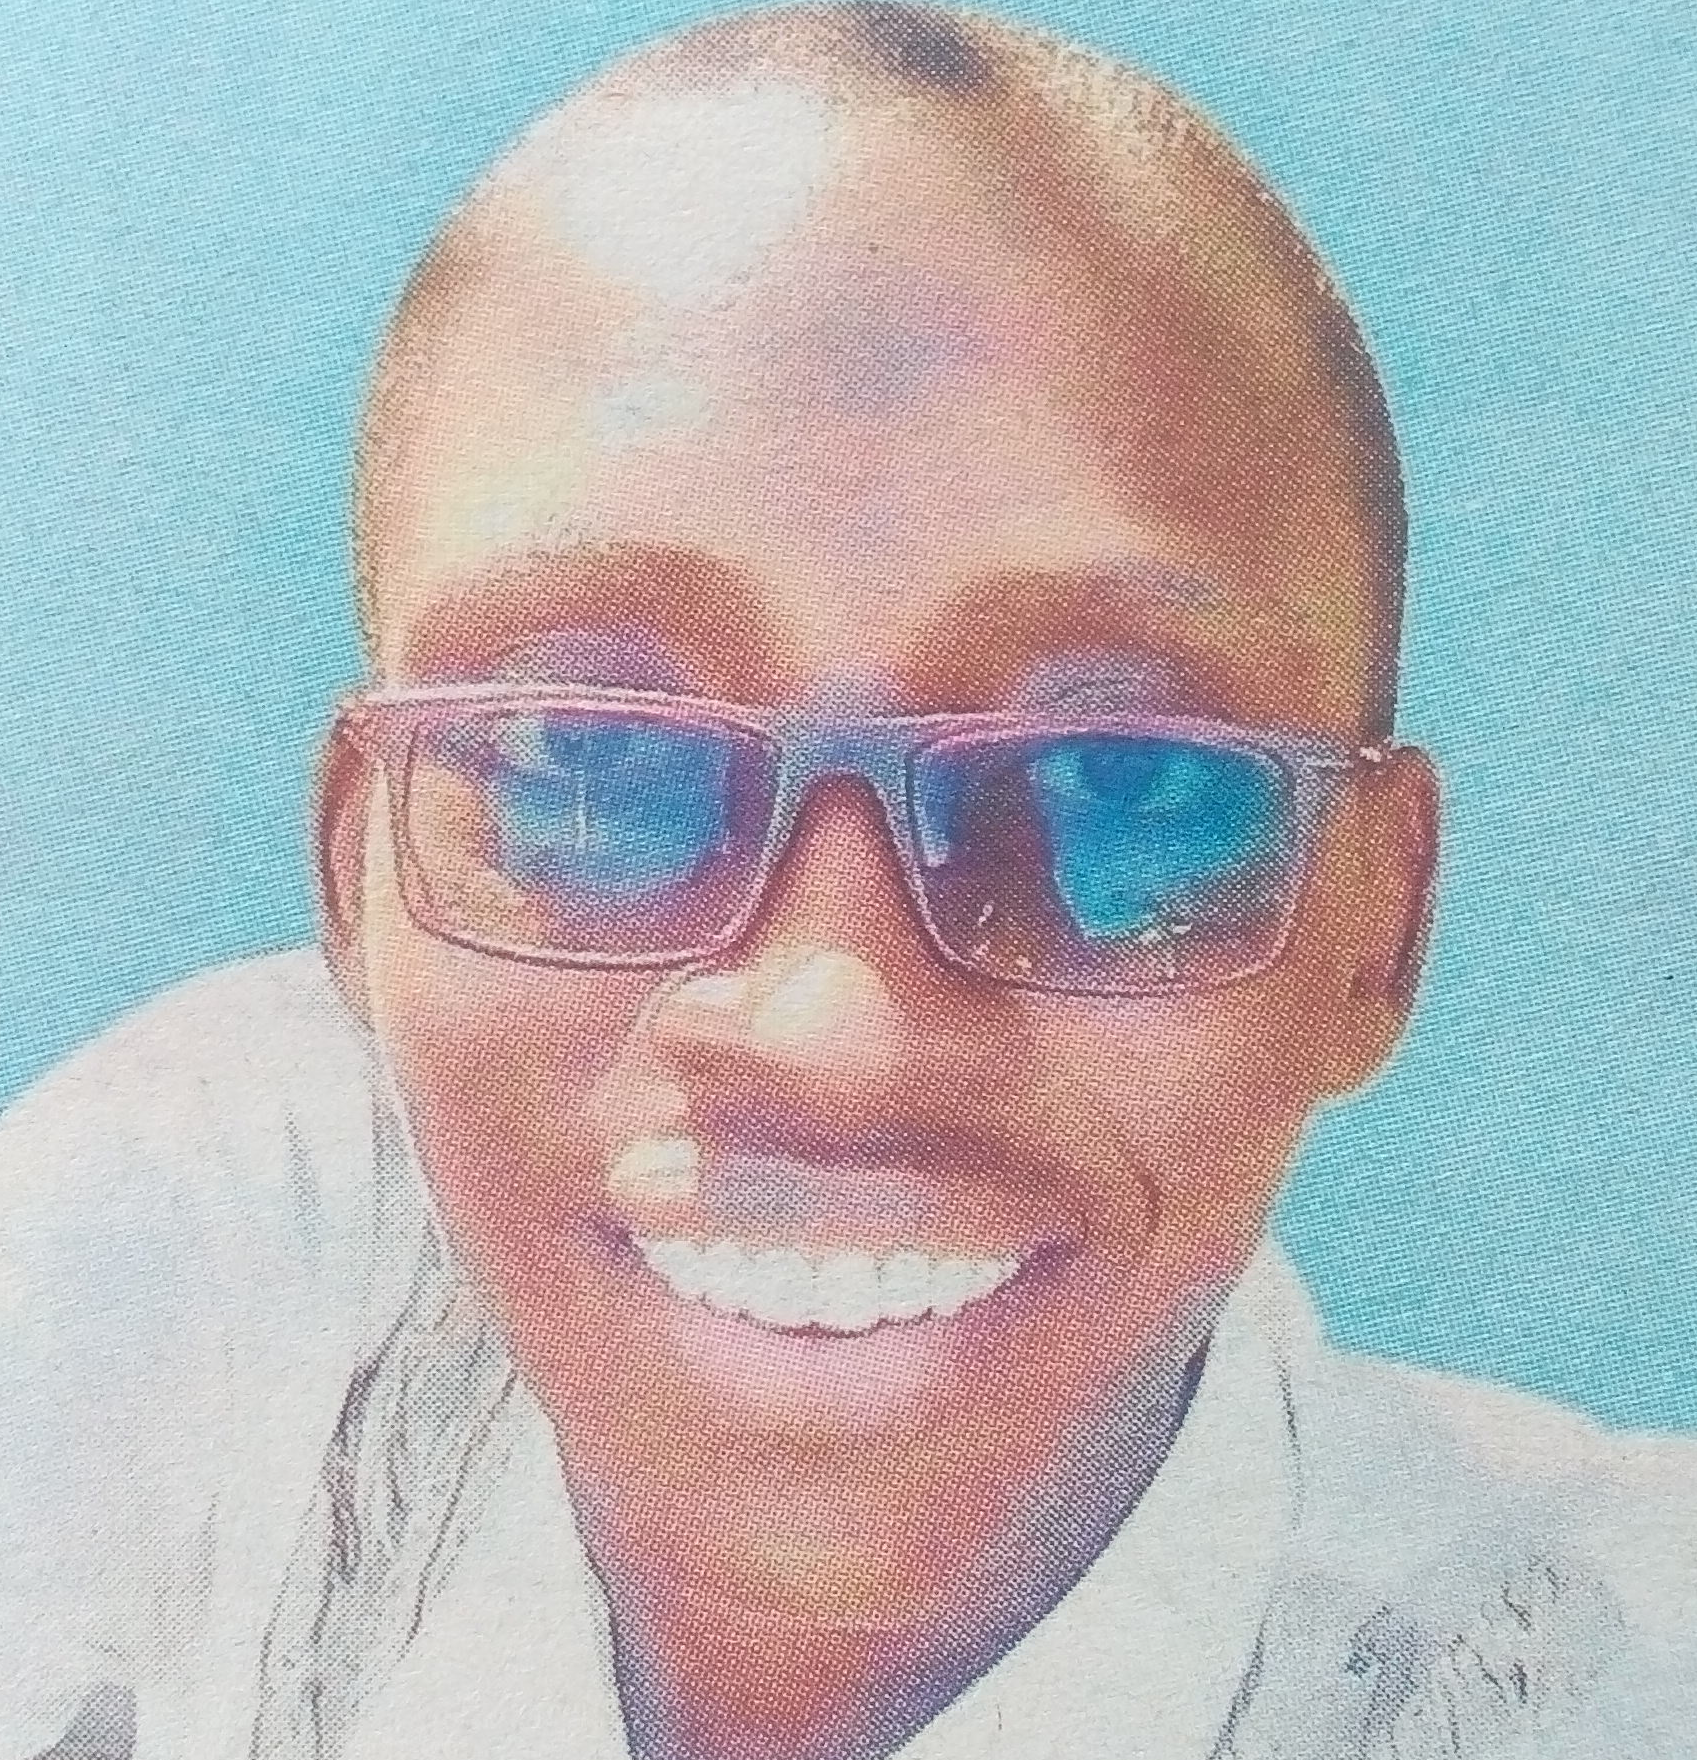 Obituary Image of Emmanuel Kibet Kenduiwo